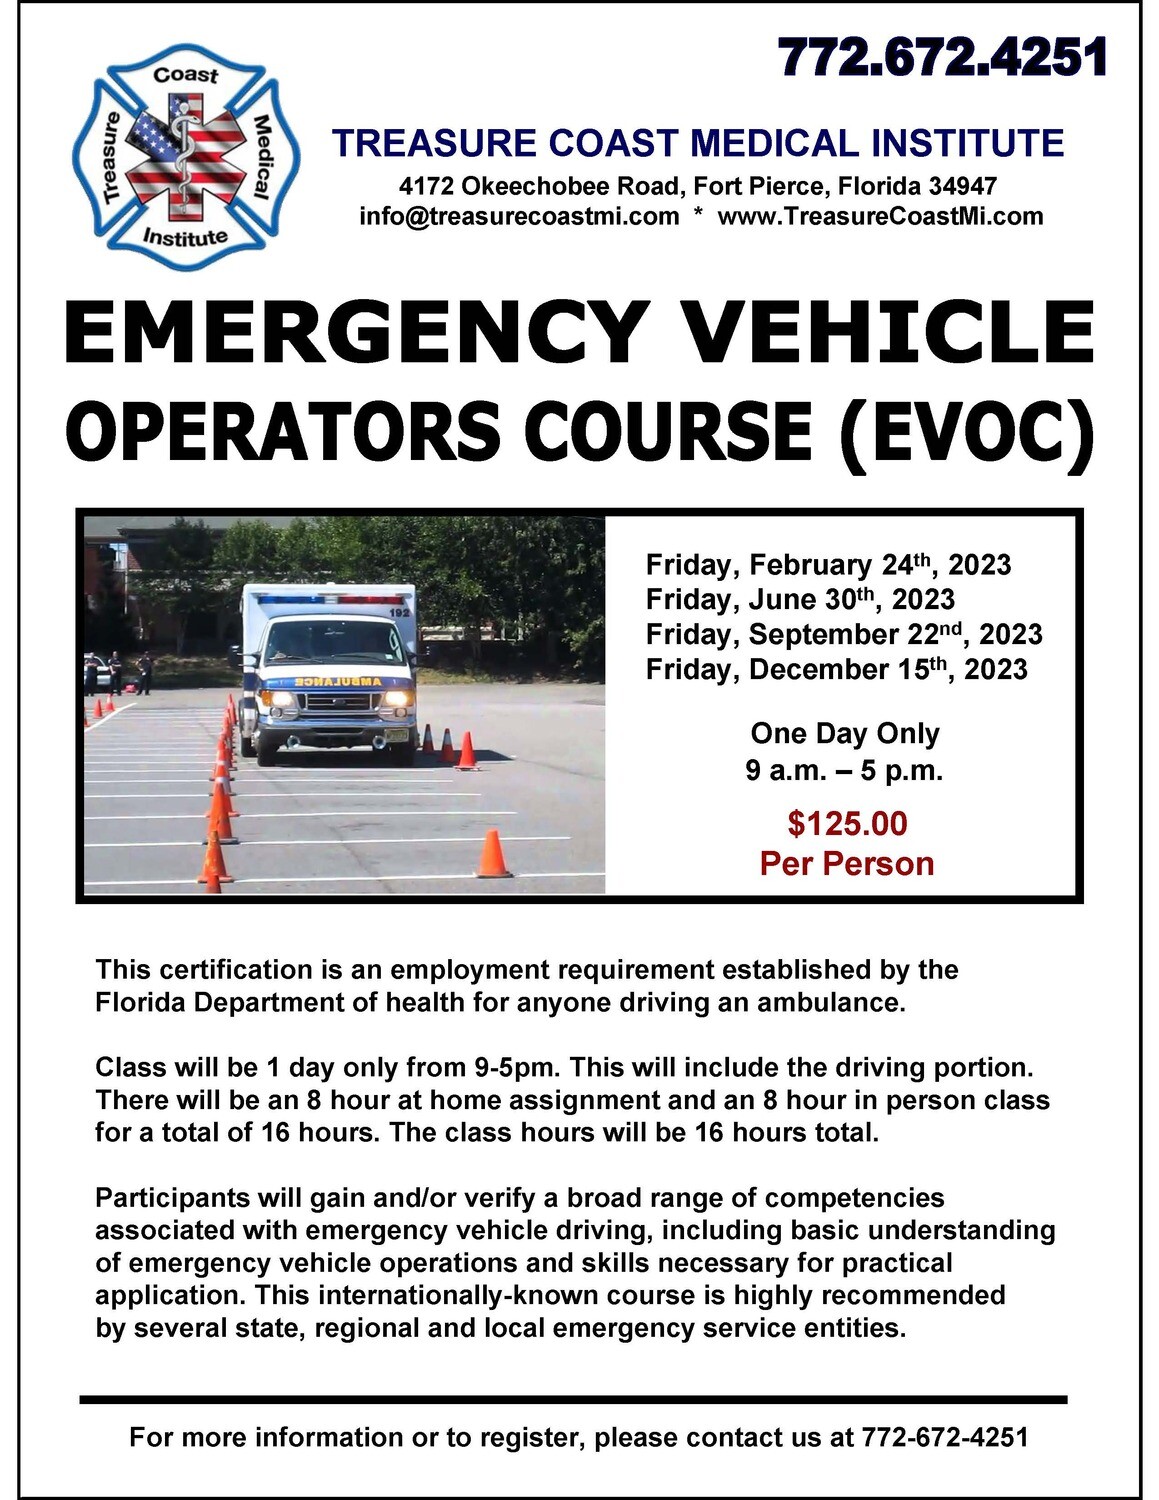 Emergency Vehicle Operators Course (EVOC) June 30th 9-5pm